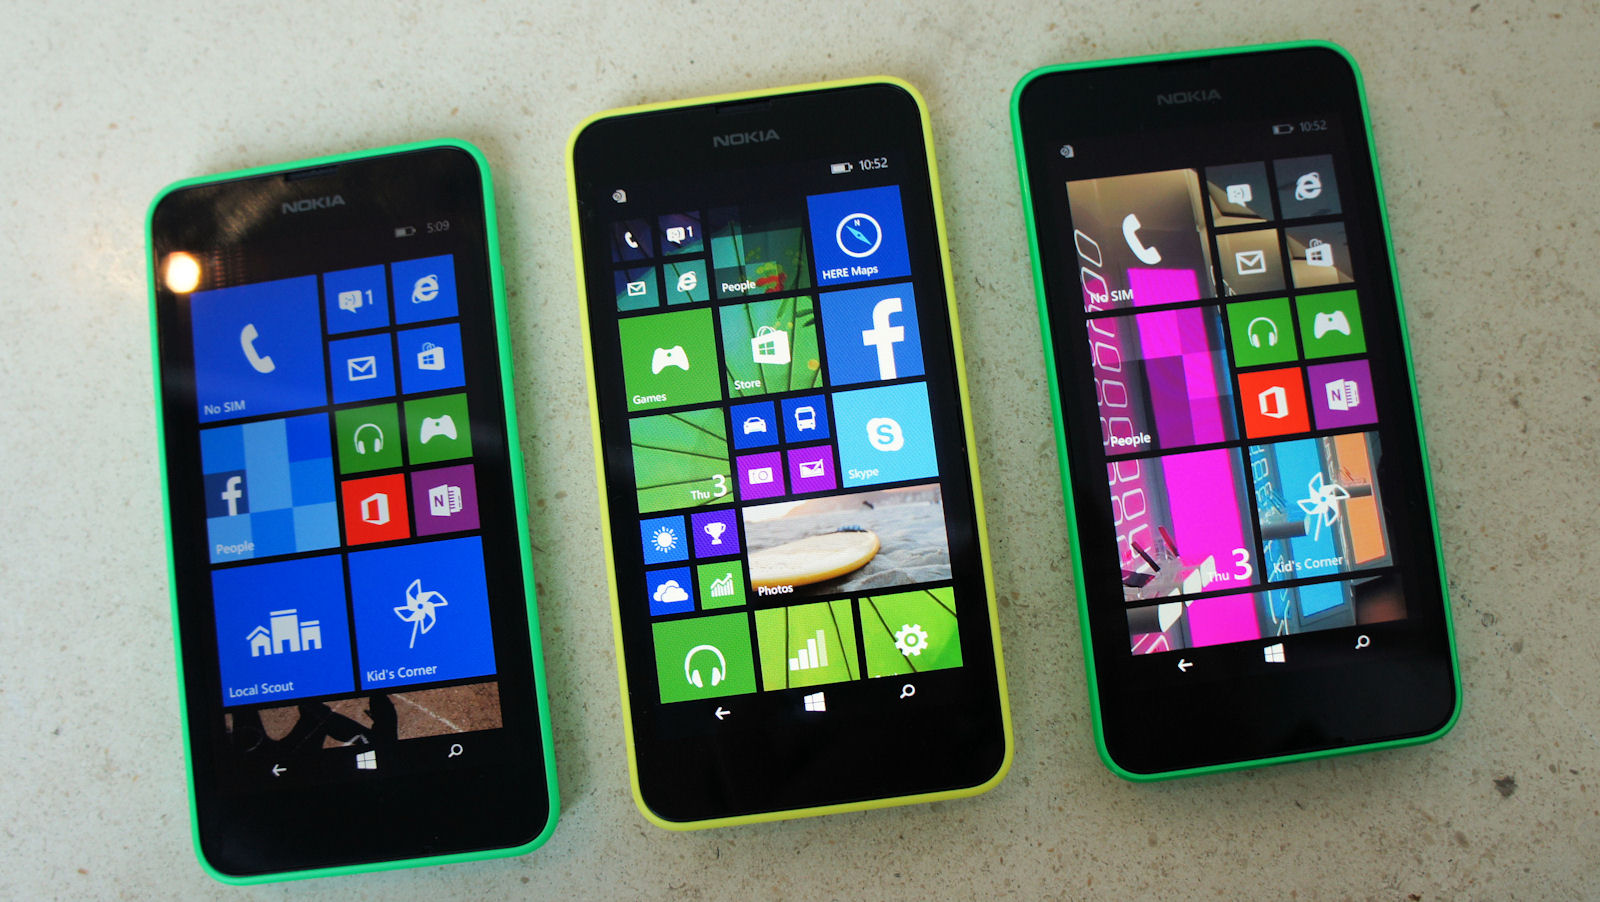 Microsoft Te Da Un Nokia Lumia A Cambio De Tu Puesto Trabajo